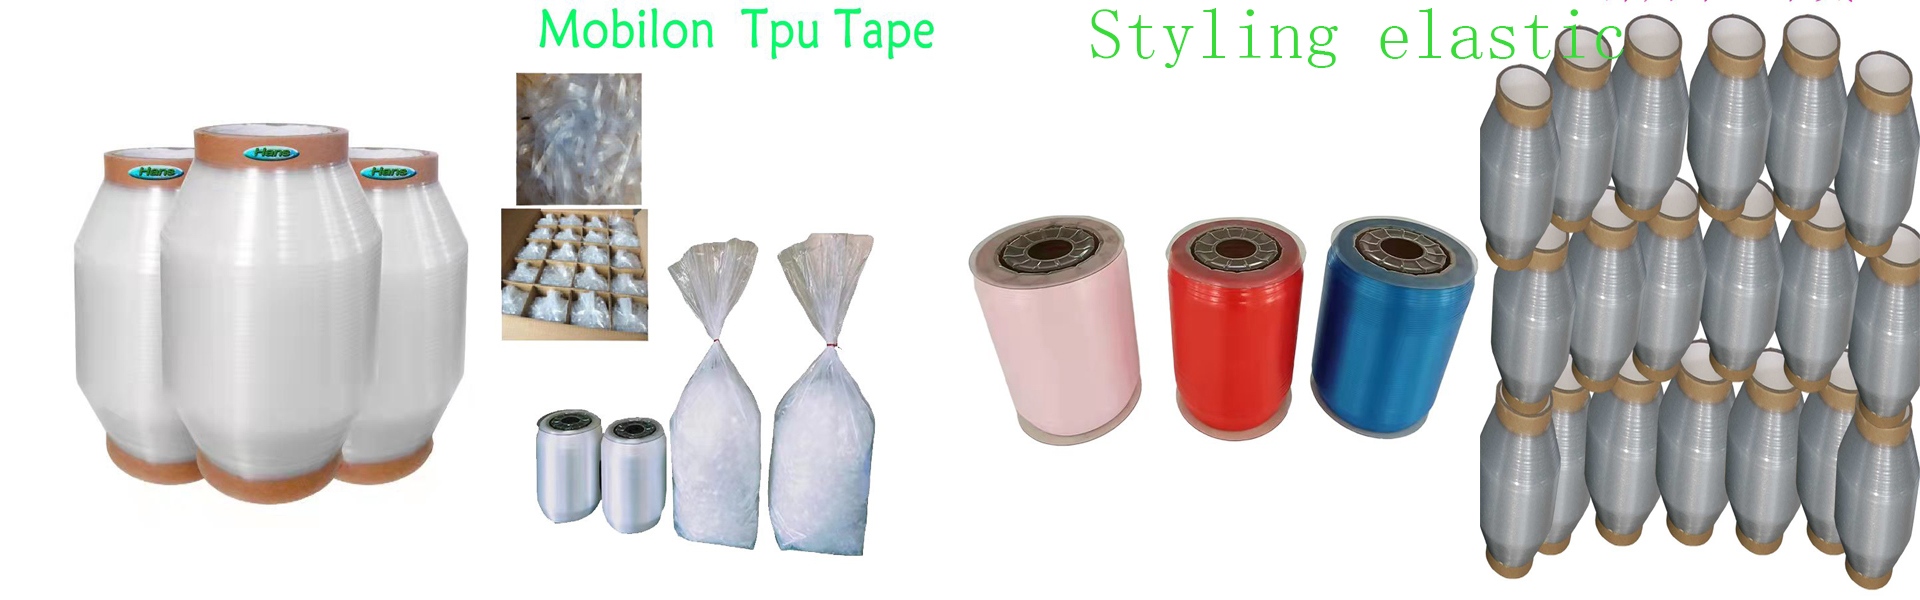 bandă mobilone, curea transparentă de umăr, film TPU,Dongguan Changan Tusheng Garment Accessories Co., Ltd.